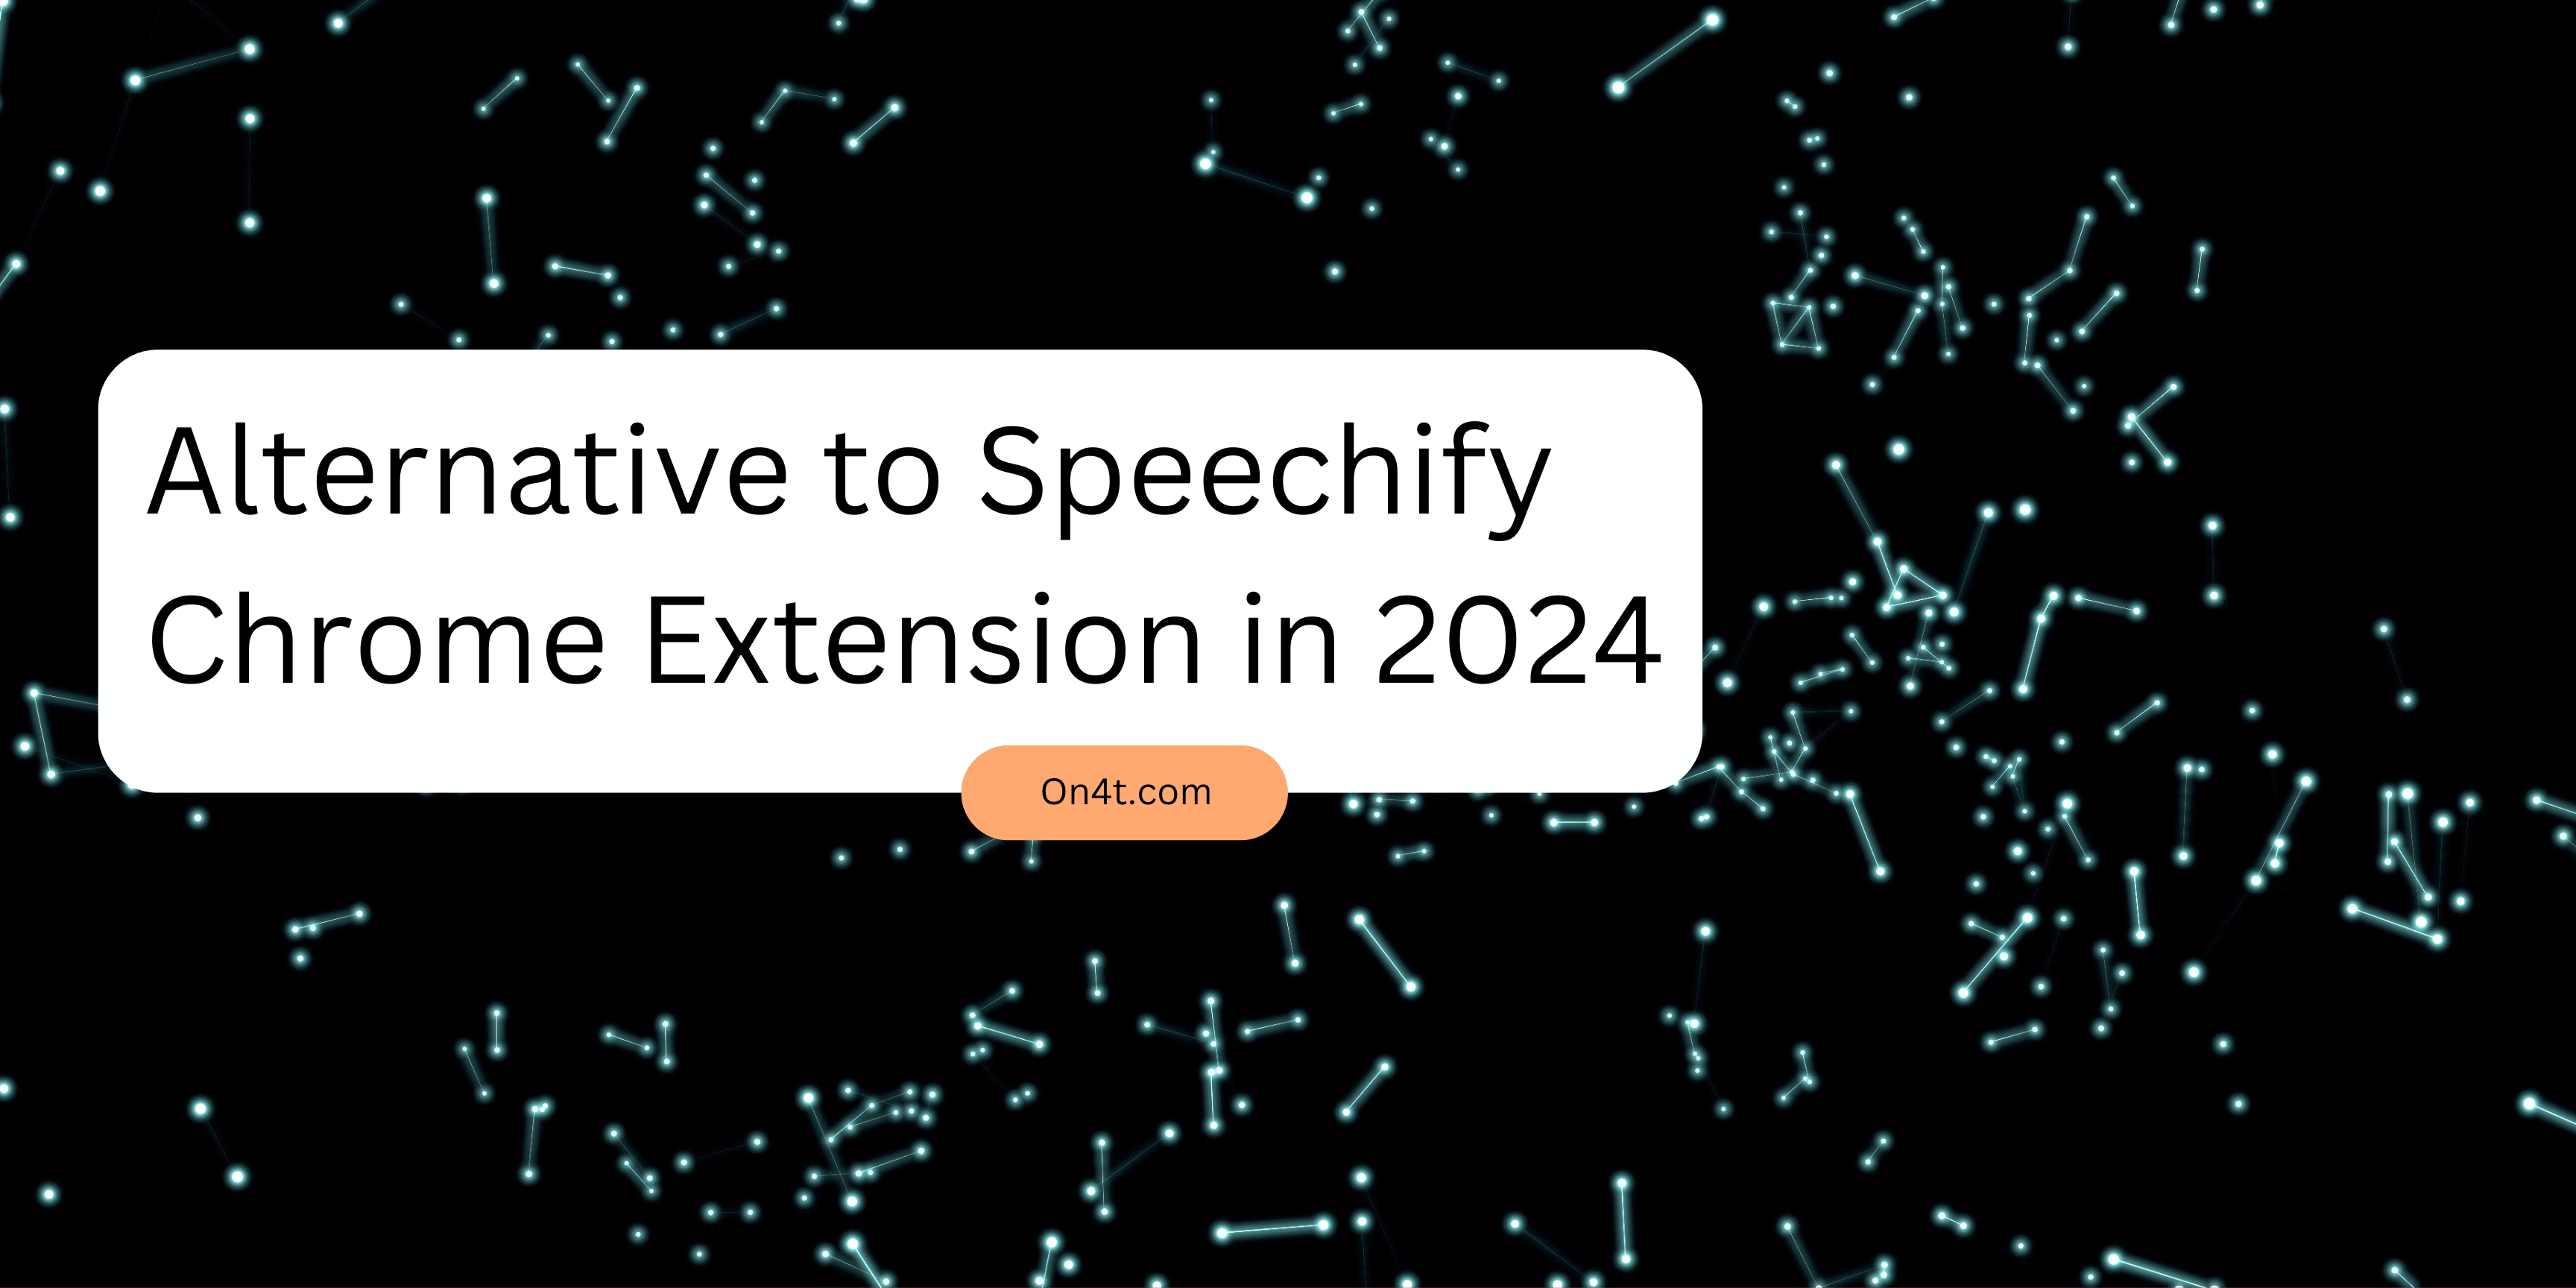 Alternative to Speechify Chrome Extension in 2024